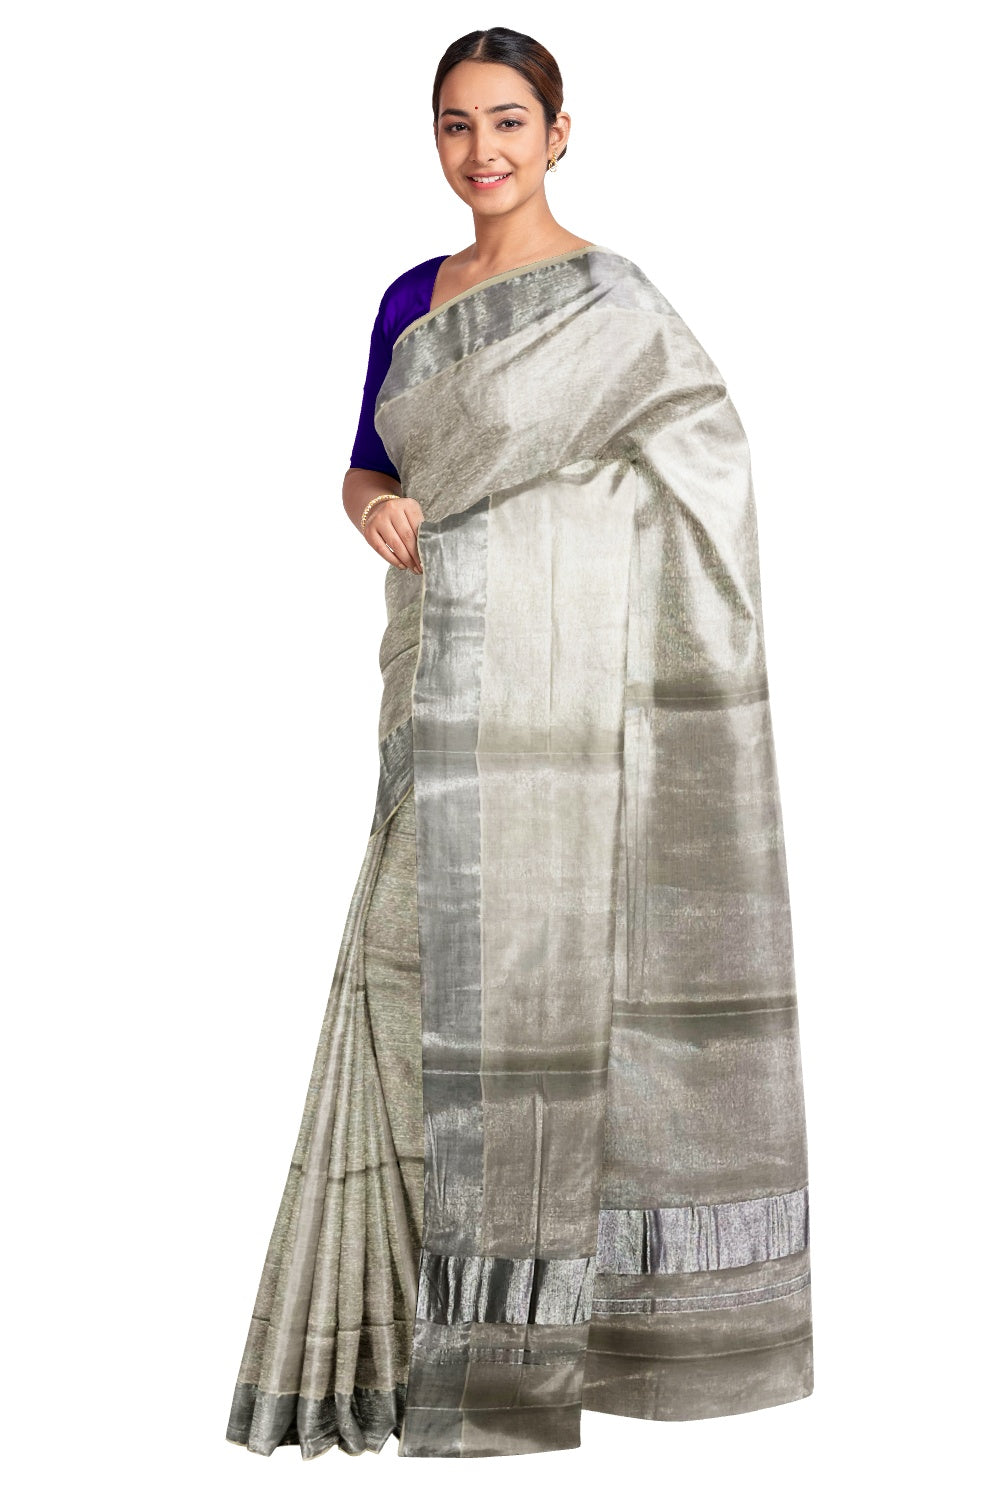 Kerala Plain Silver Tissue Kasavu Saree with 3 inch Pallu